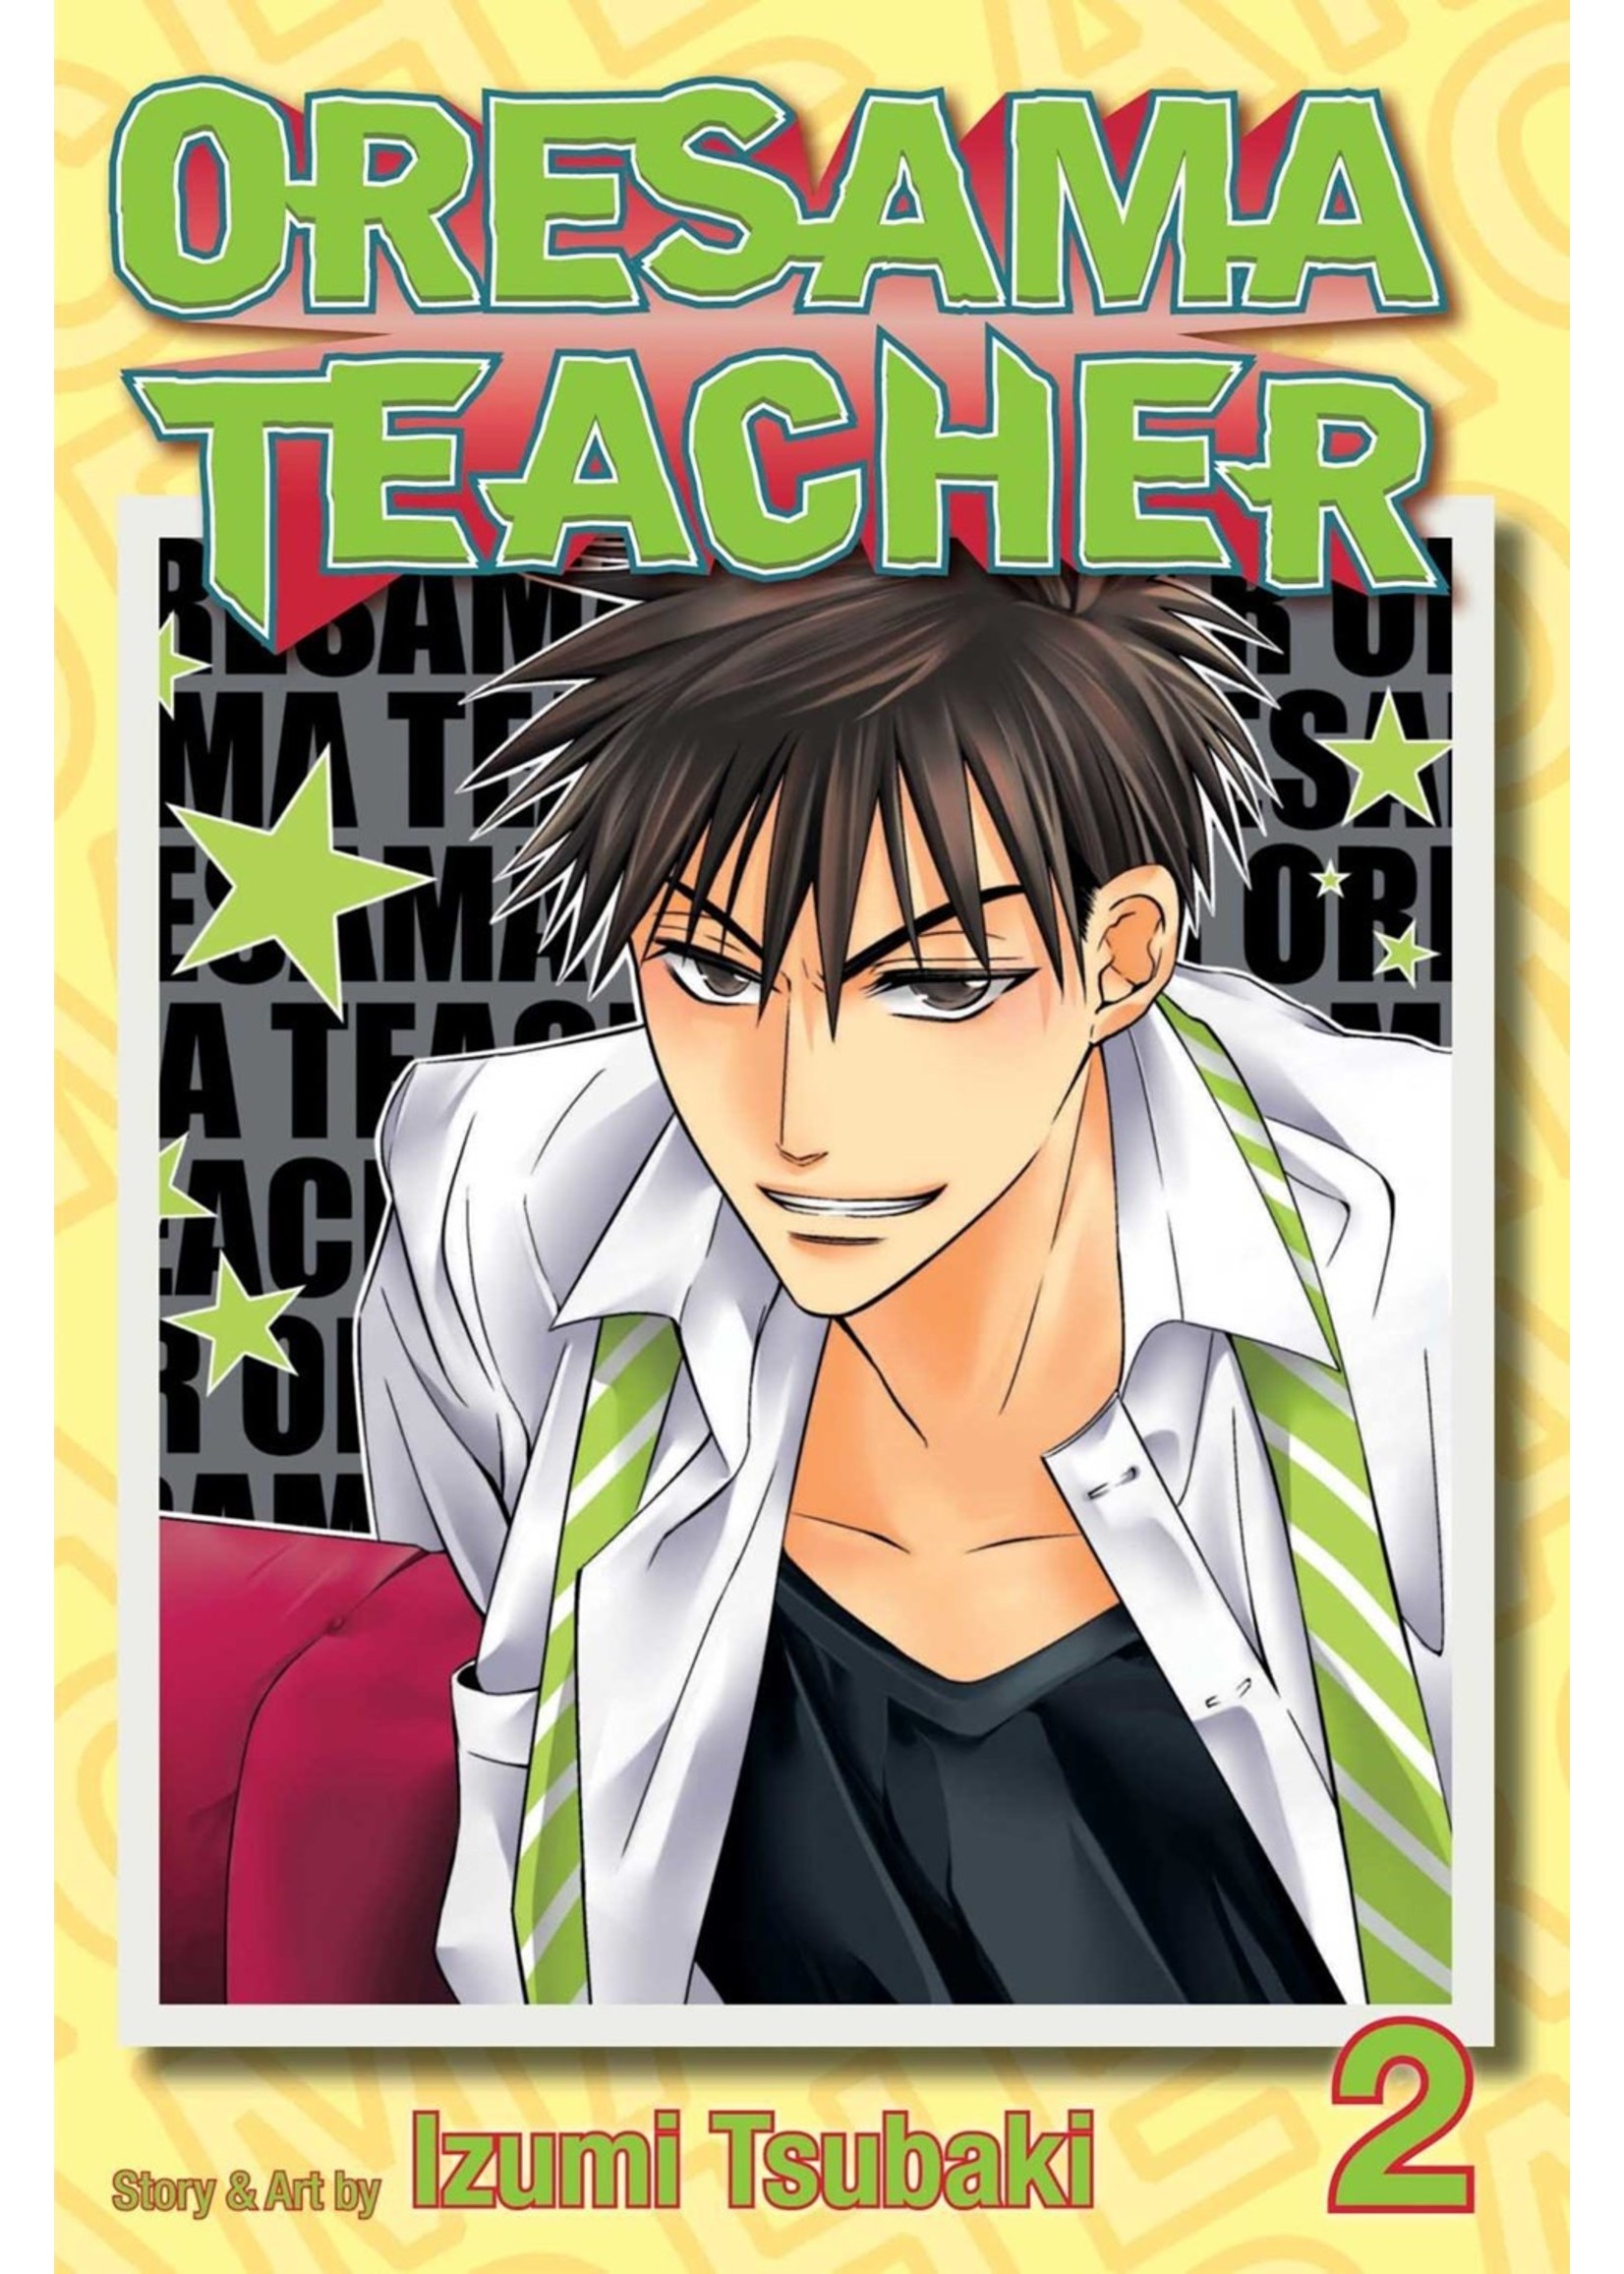 Manga ORESAMA TEACHER V2